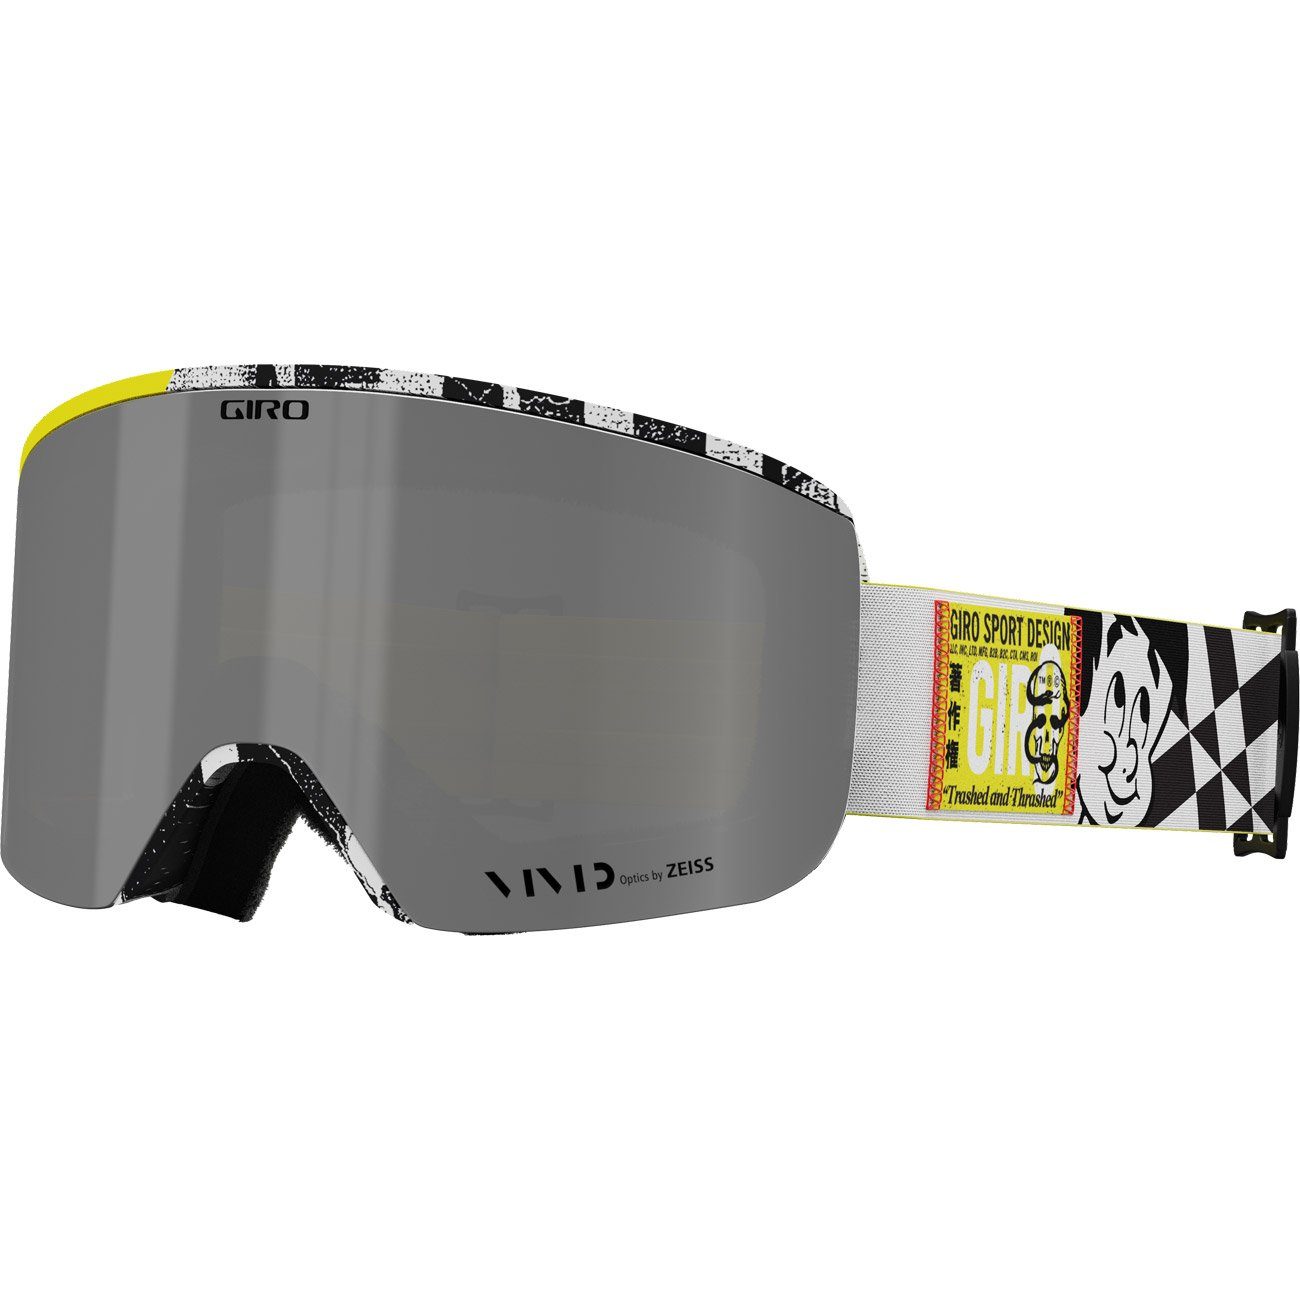 Giro onyx/infra blk/wht Snowboardbrille, trashed viv AXIS